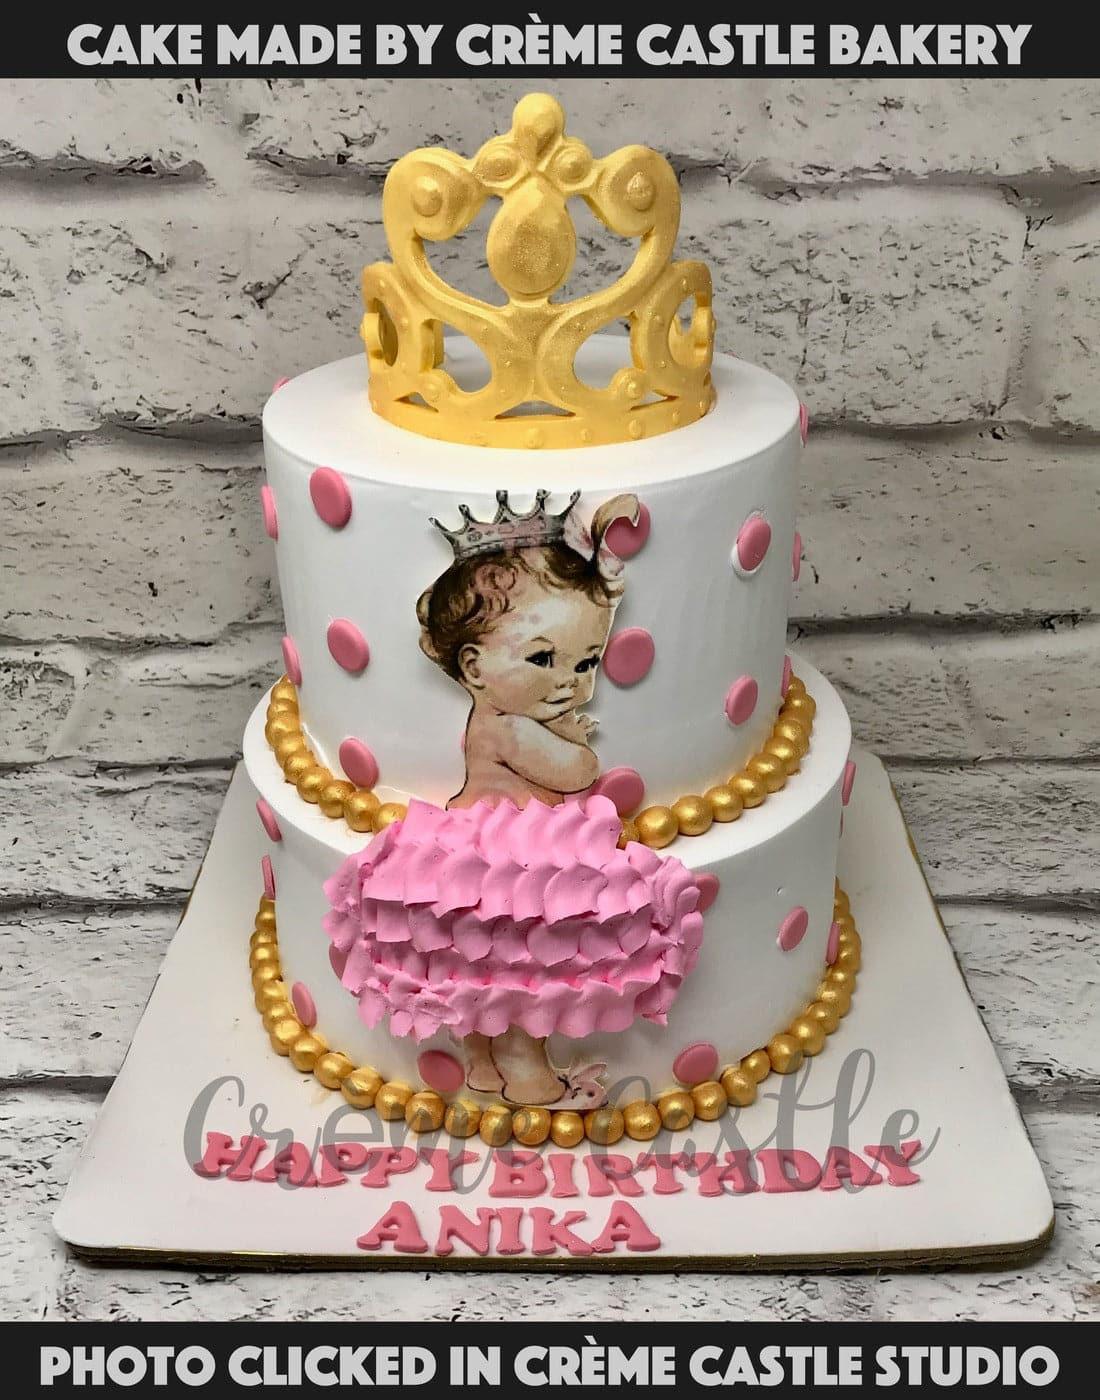 1st Birthday Cakes for Baby Girl Princess | Cake for Girl | Yummy Cake